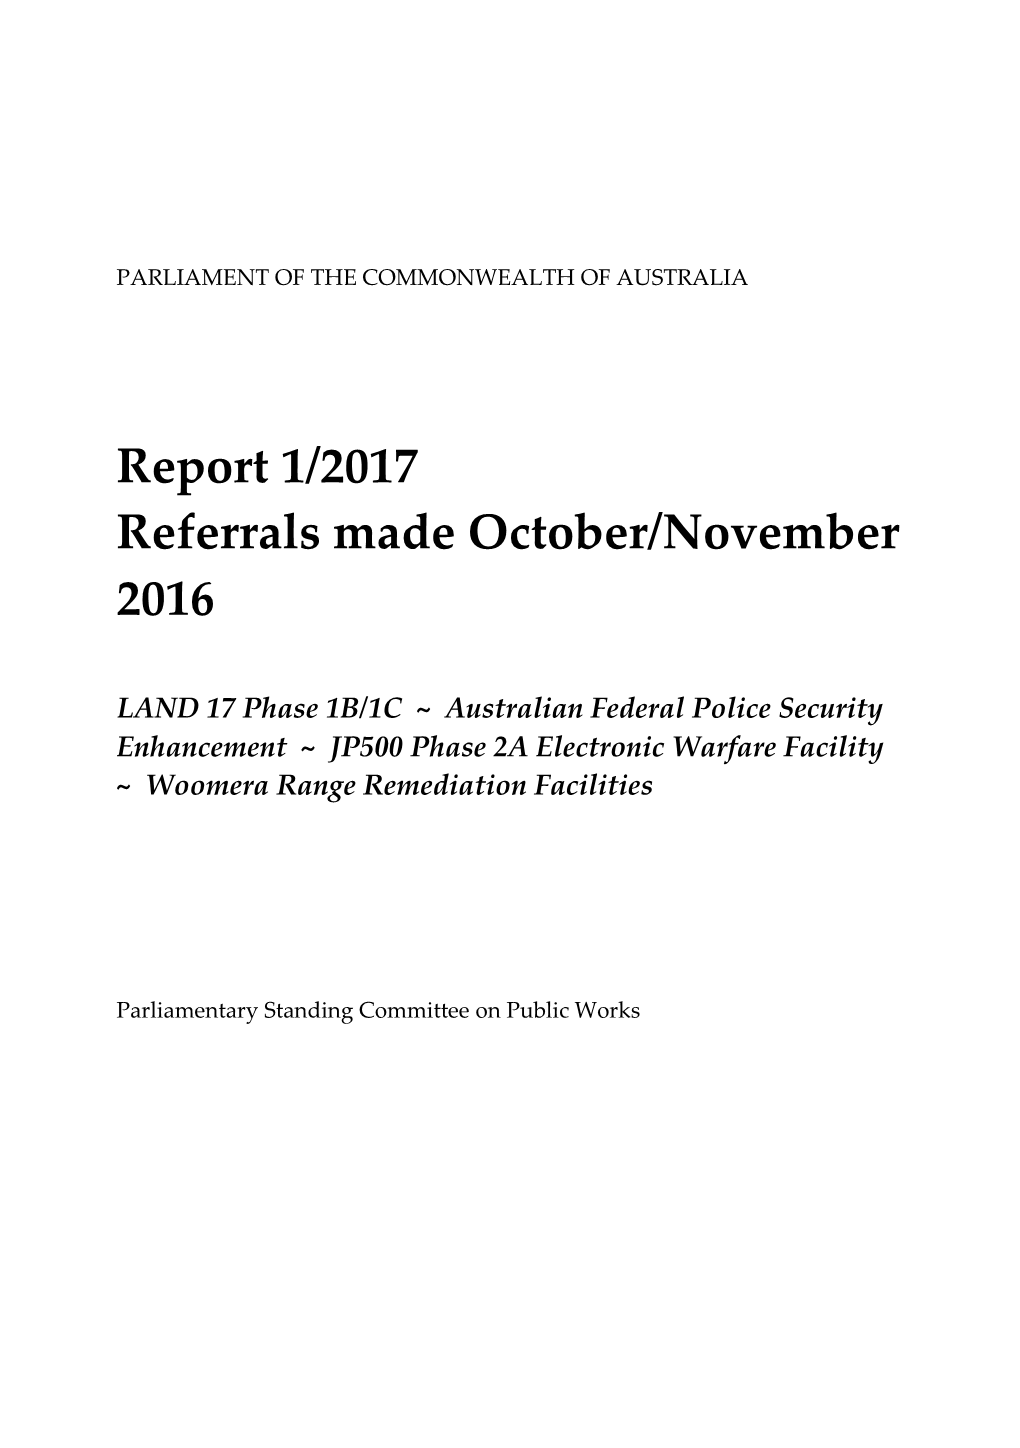 Report 1/2017 Referrals Made October/November 2016